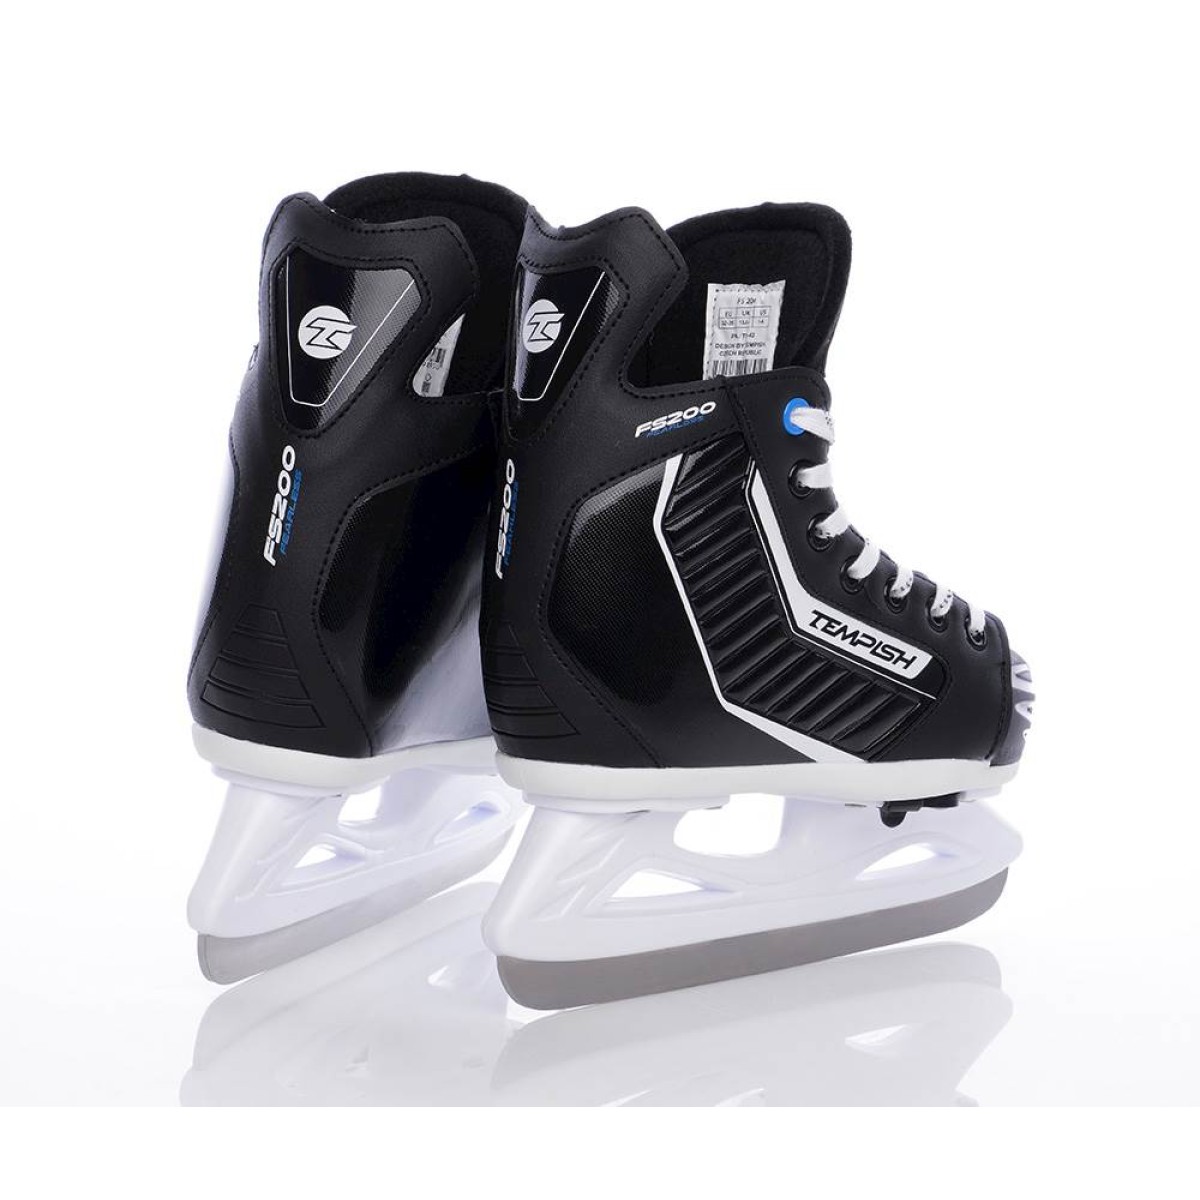 FS 200 adjustable hockey skate TEMPISH - view 12